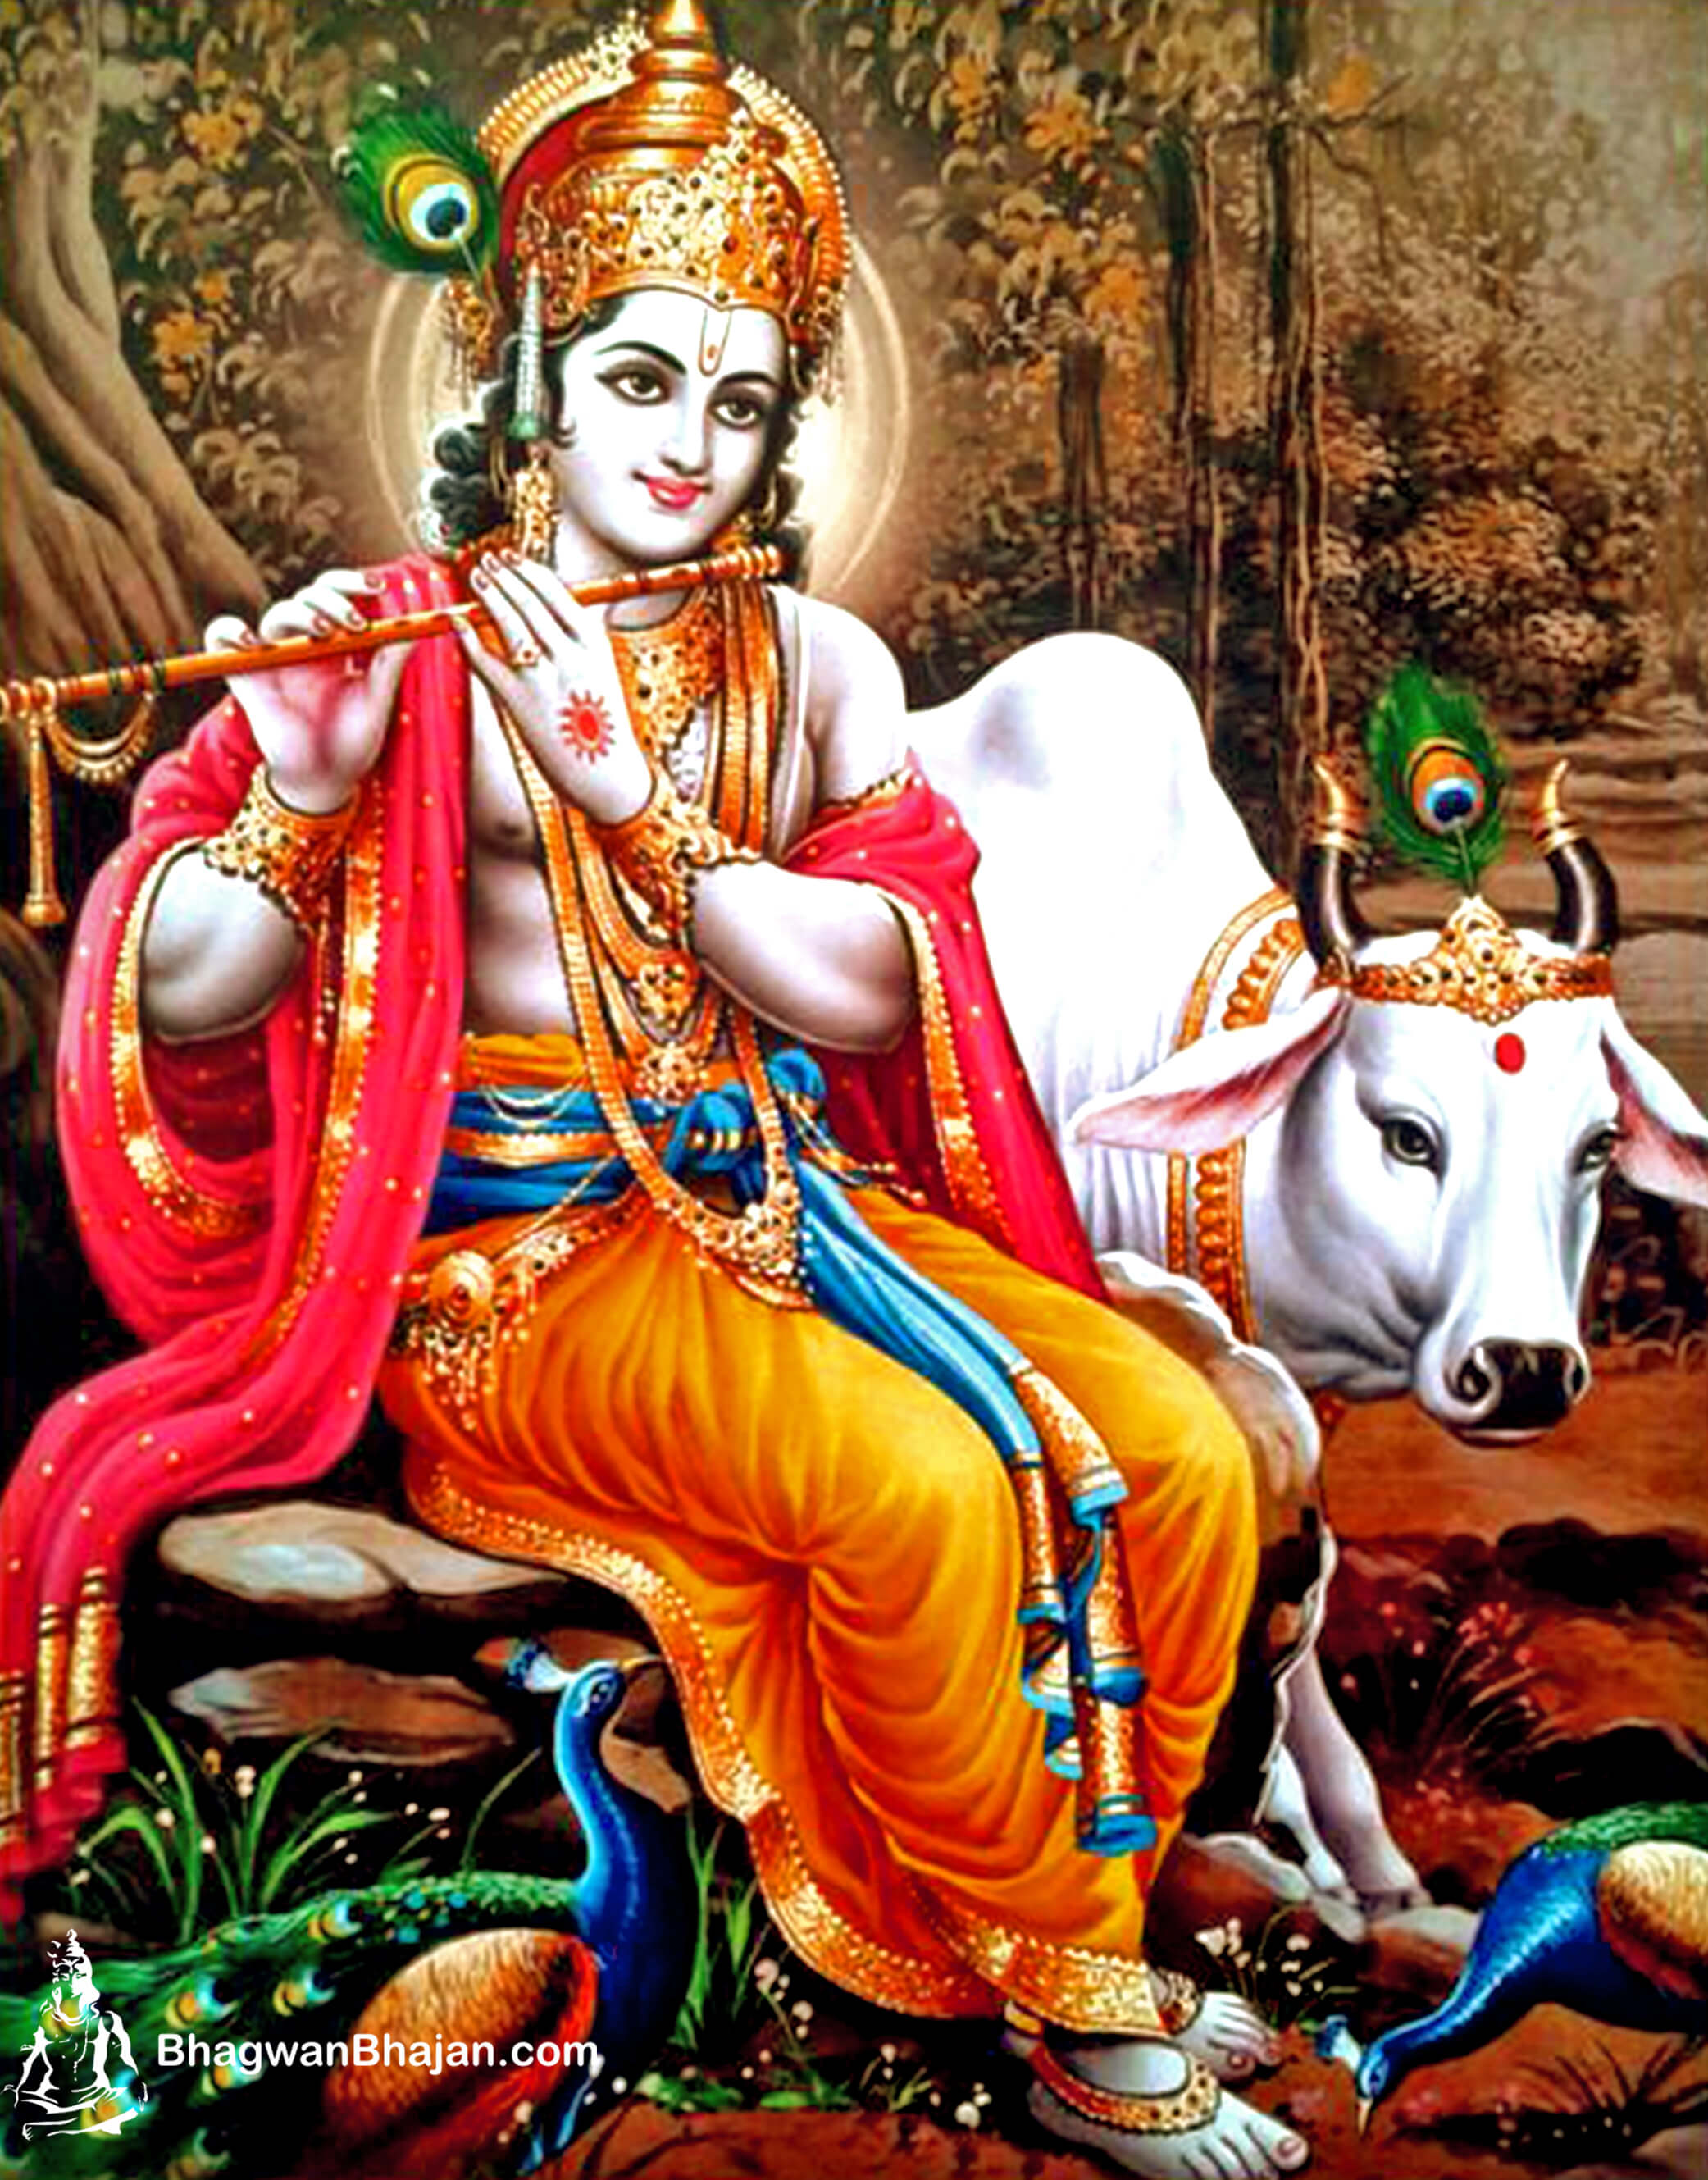 Bhagwan Shri Krishna Hd Wallpapers Images Free Download Shree Krishna Hd Photos And Images